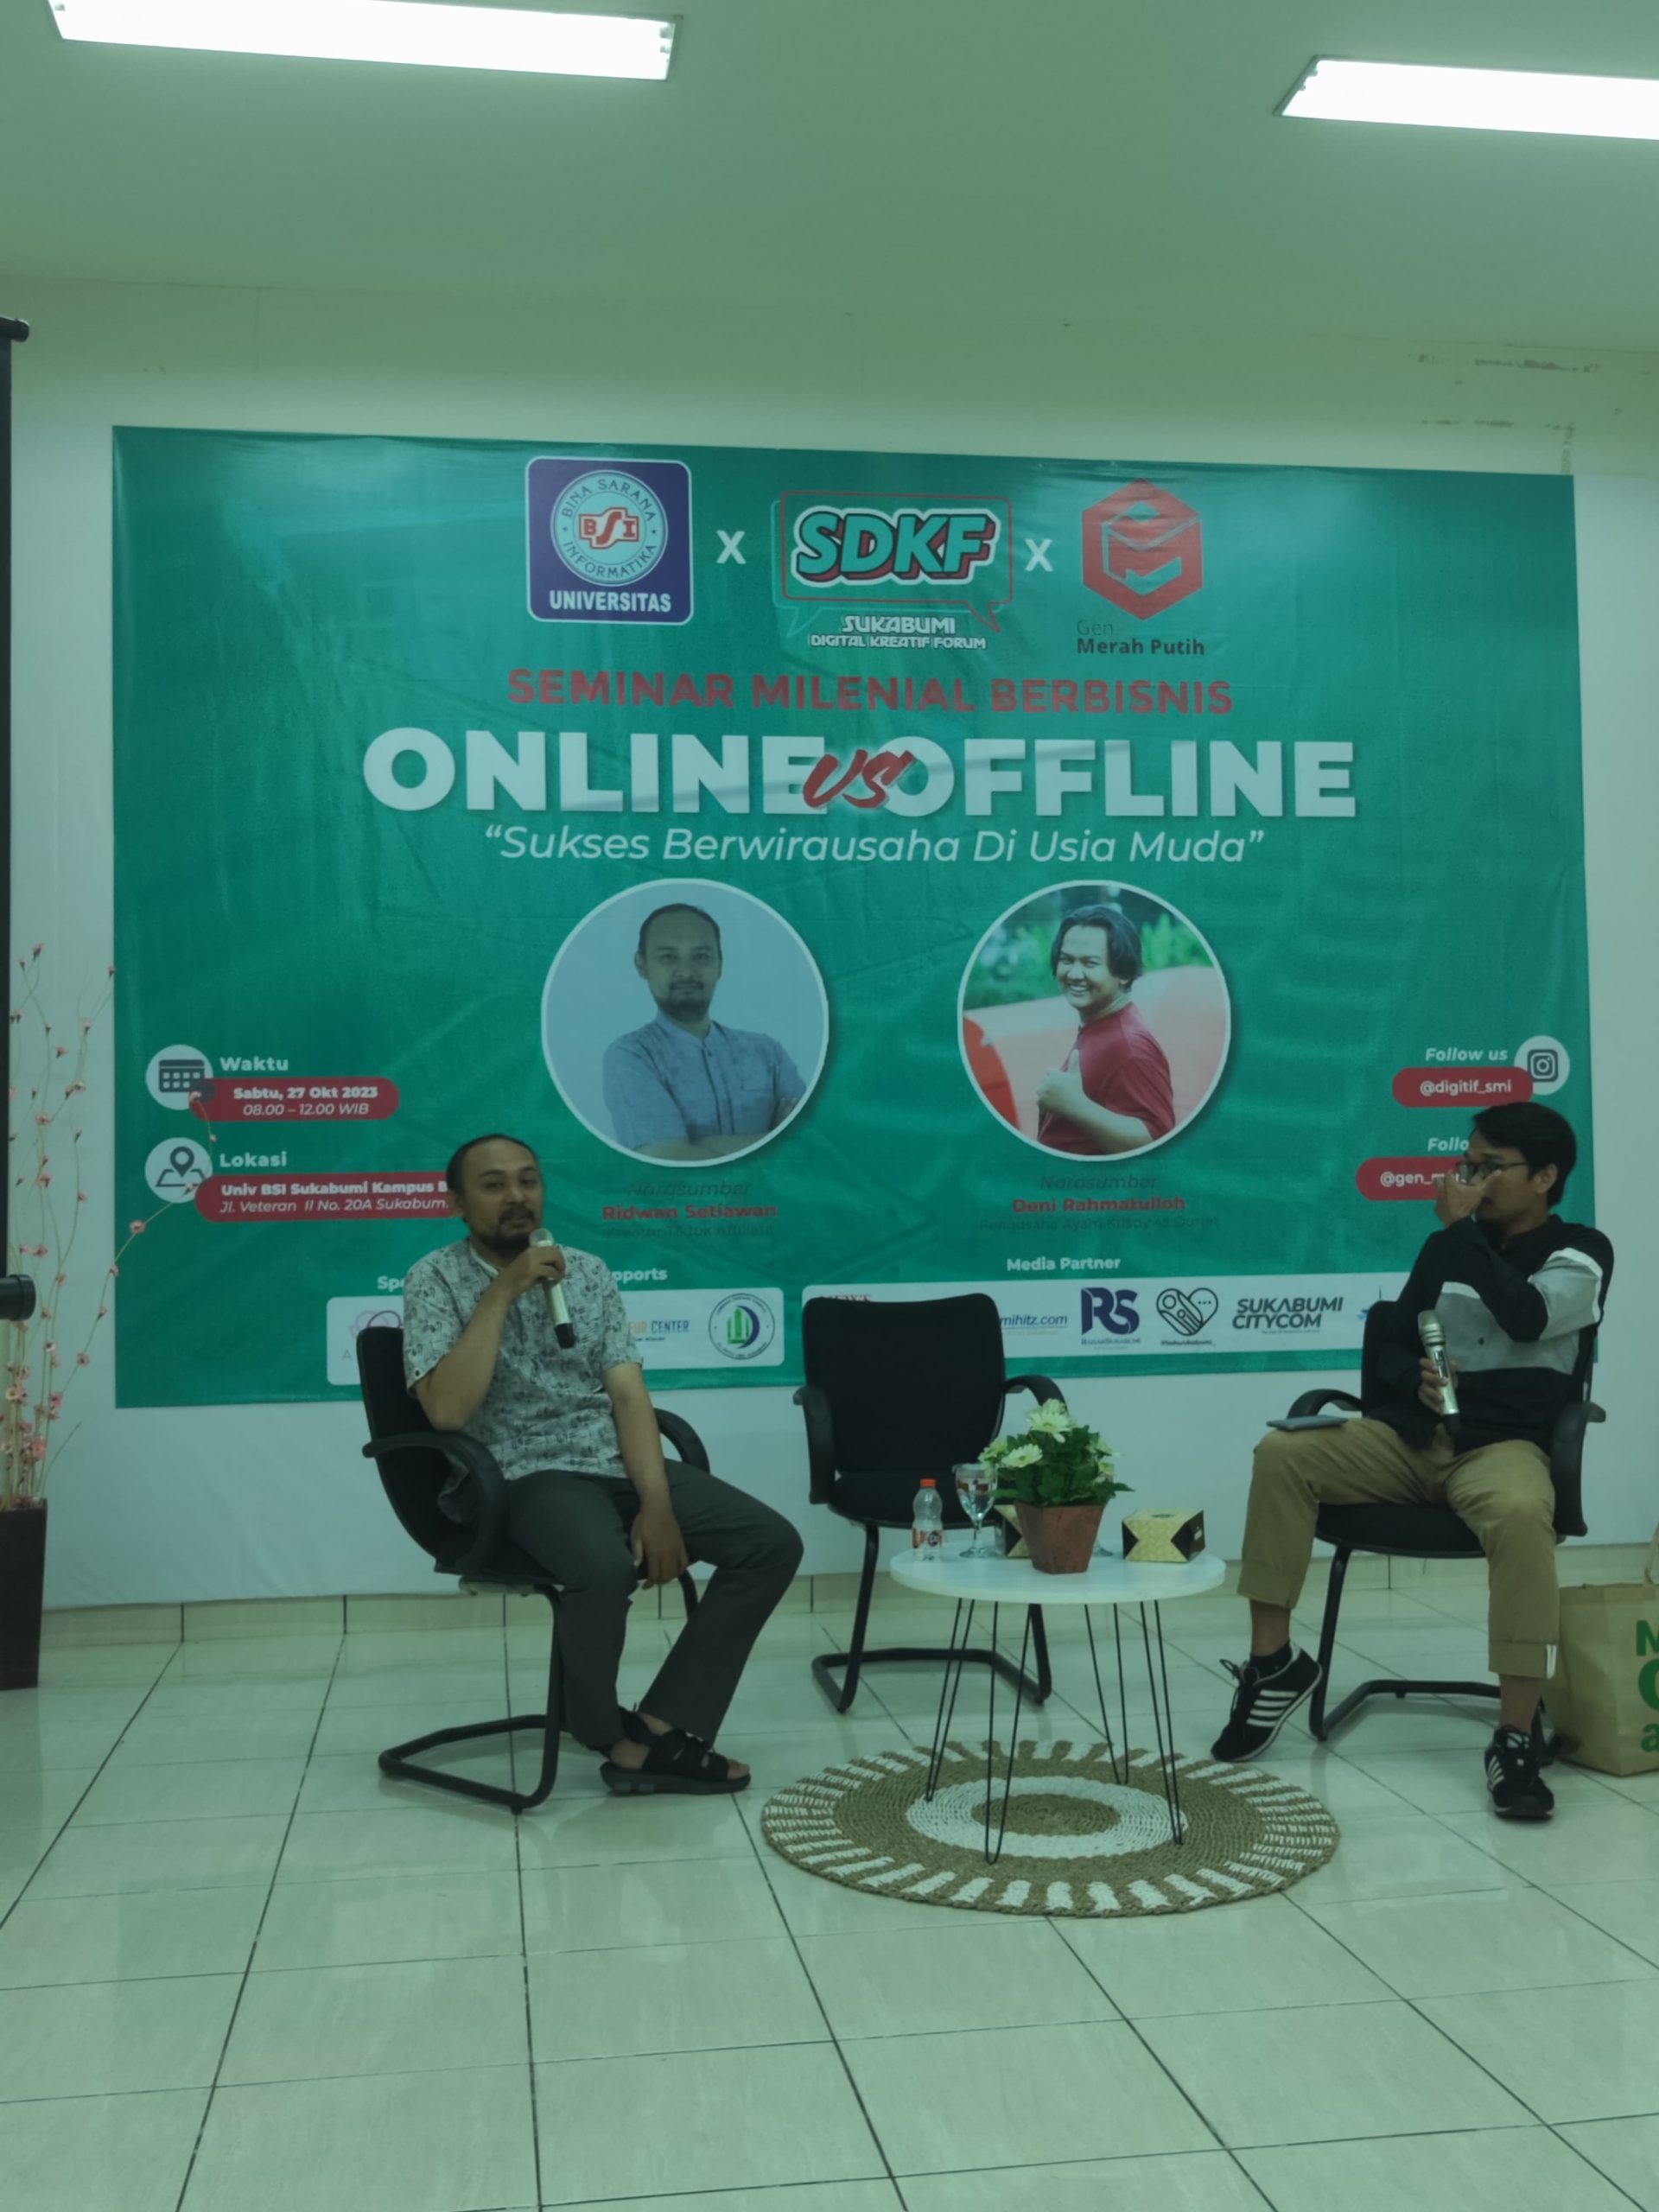 Seminar Milenial Bisnis Offline vs Online Pembicara Ridwan